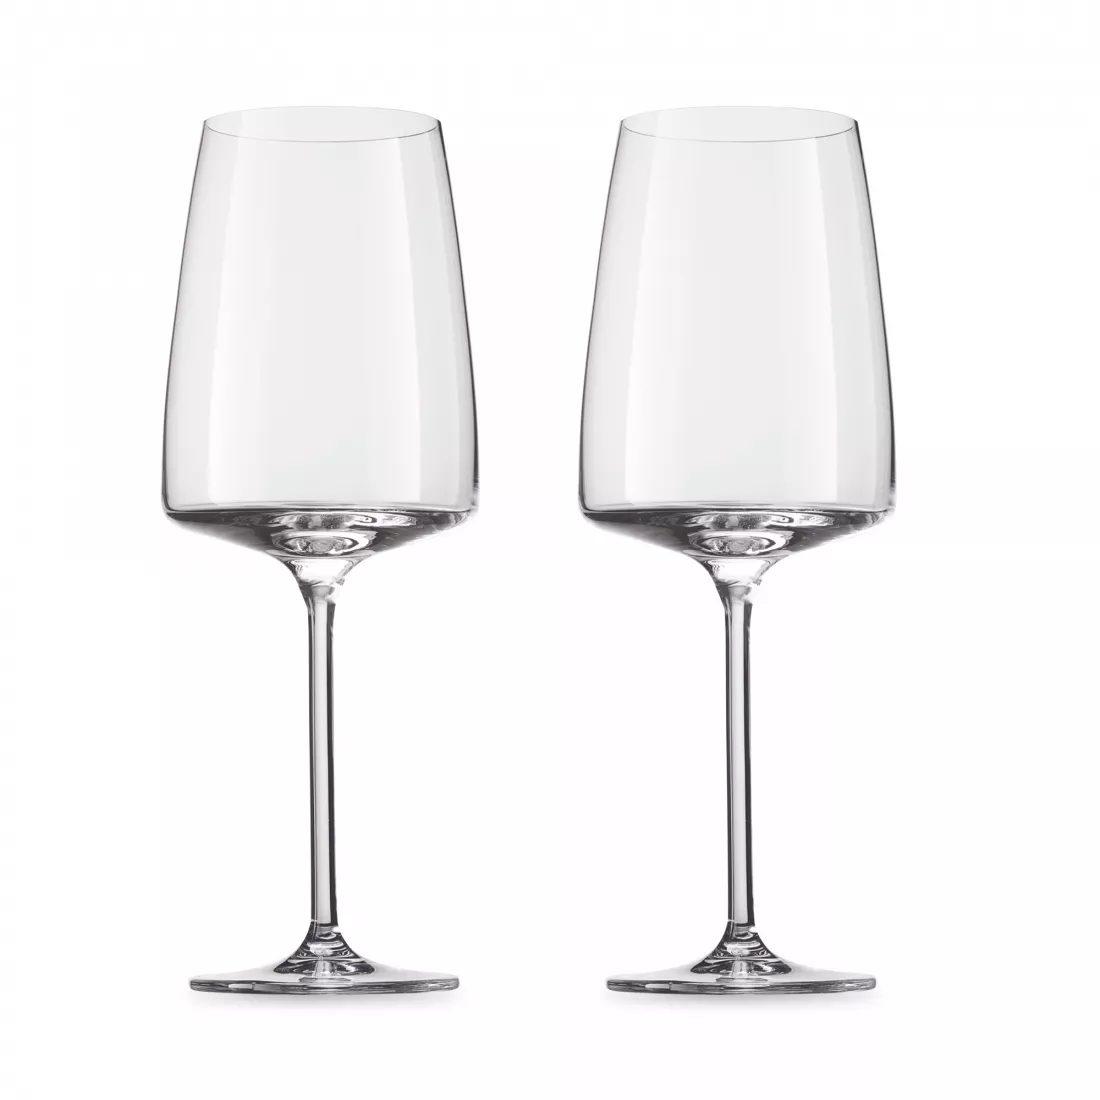 ZWIESEL GLAS Набор бокалов для вин Fruity & Delicate, объем 535 мл, 2 шт., серия Vivid Senses